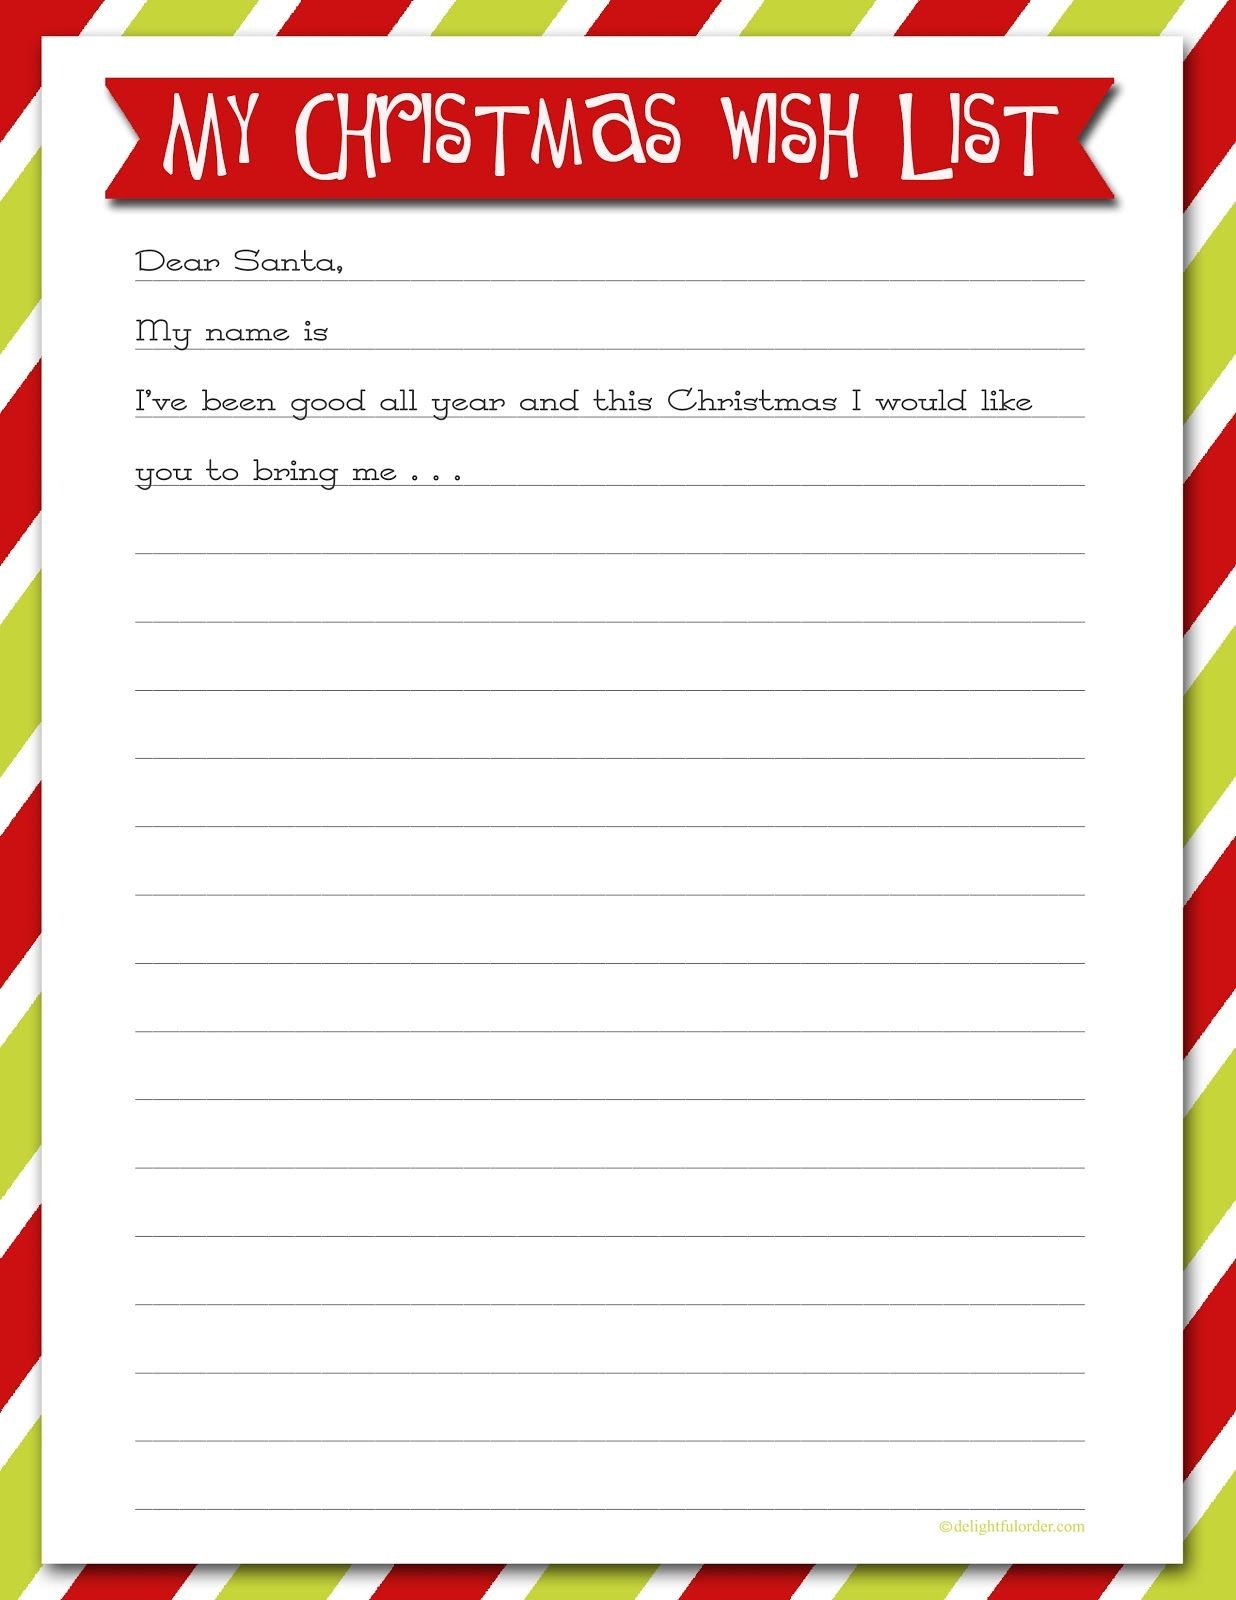 Delightful Order: Christmas Wish List - Free Printable | Delightful - Free Printable Christmas List Maker